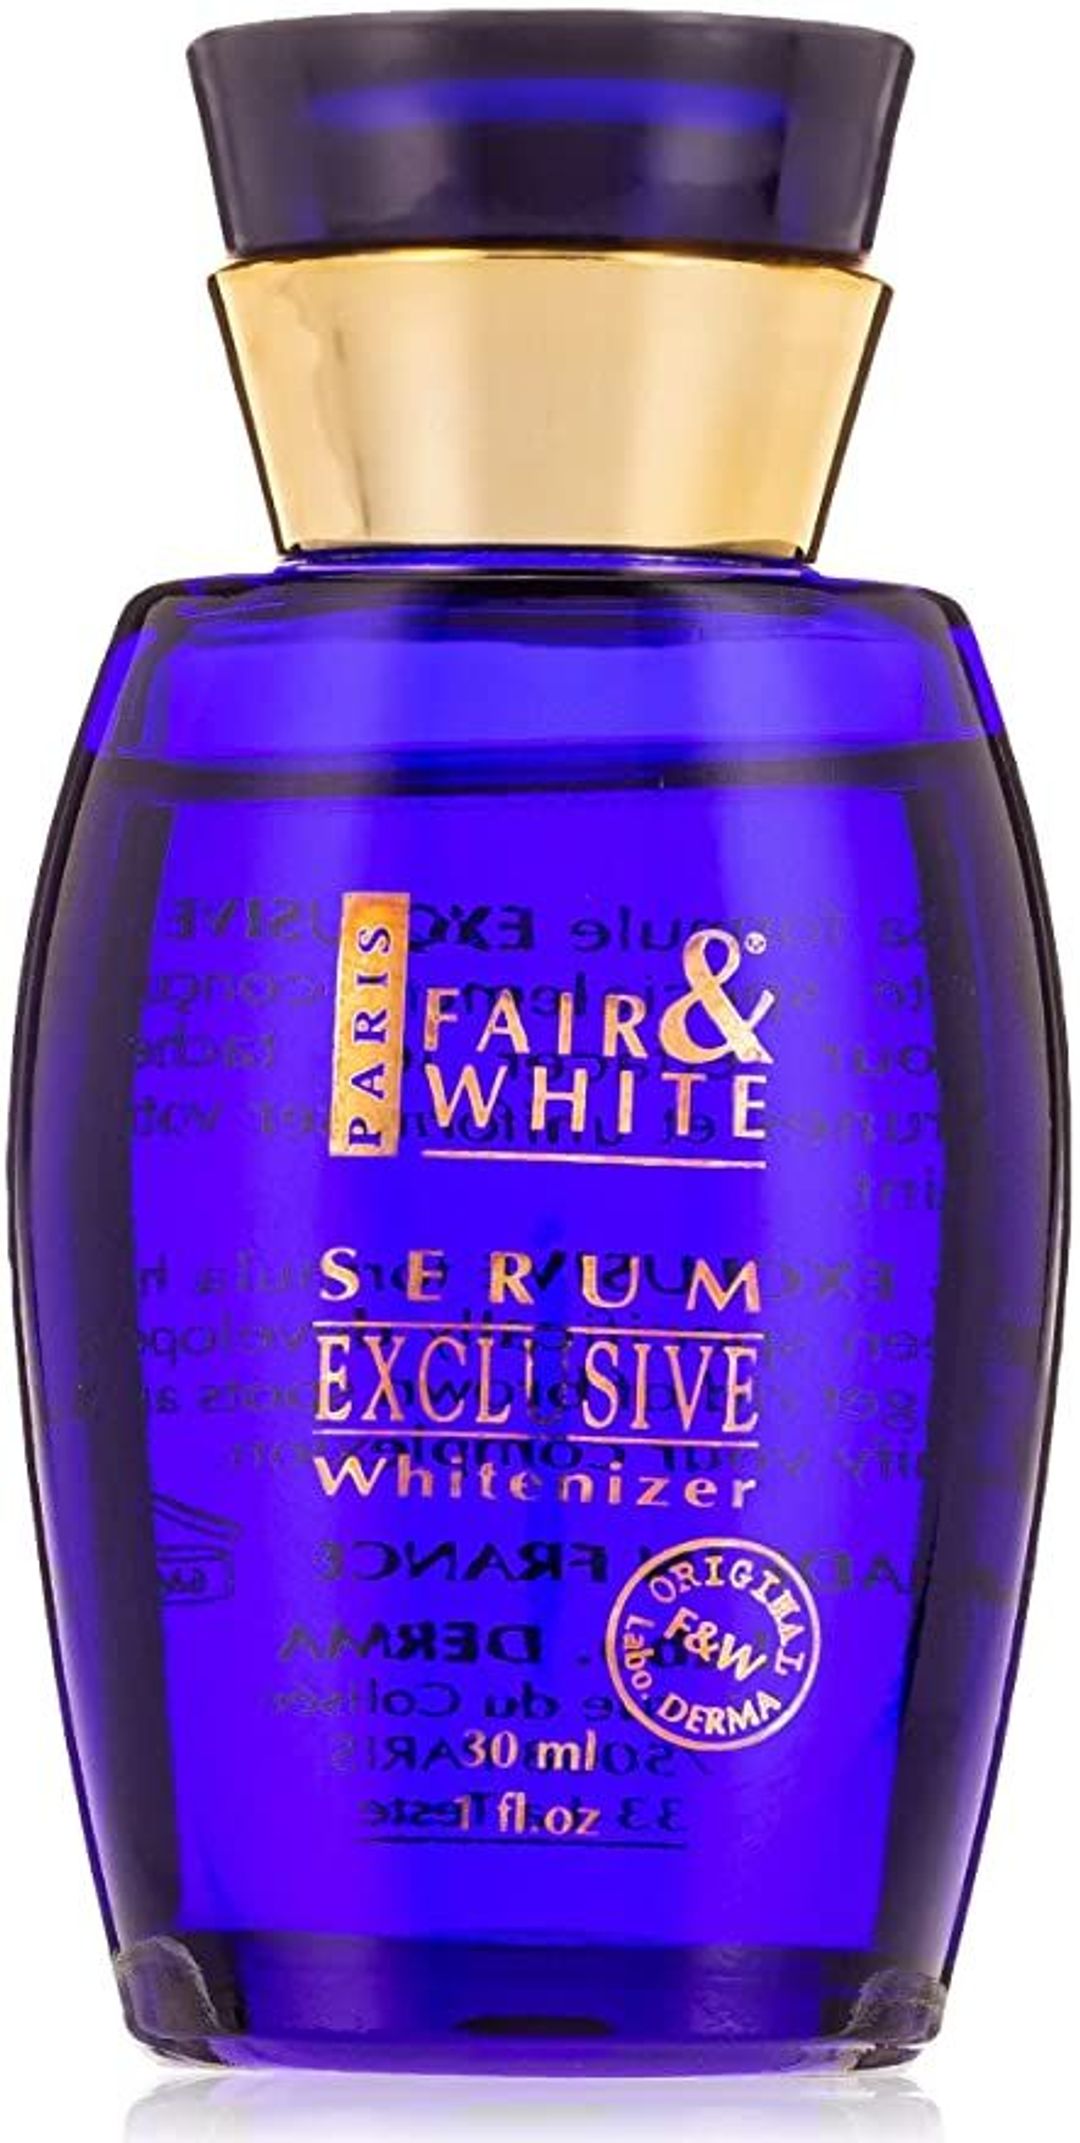 Fair & White Exclusive Whitenizer Serum With Vitamin C - 30ml